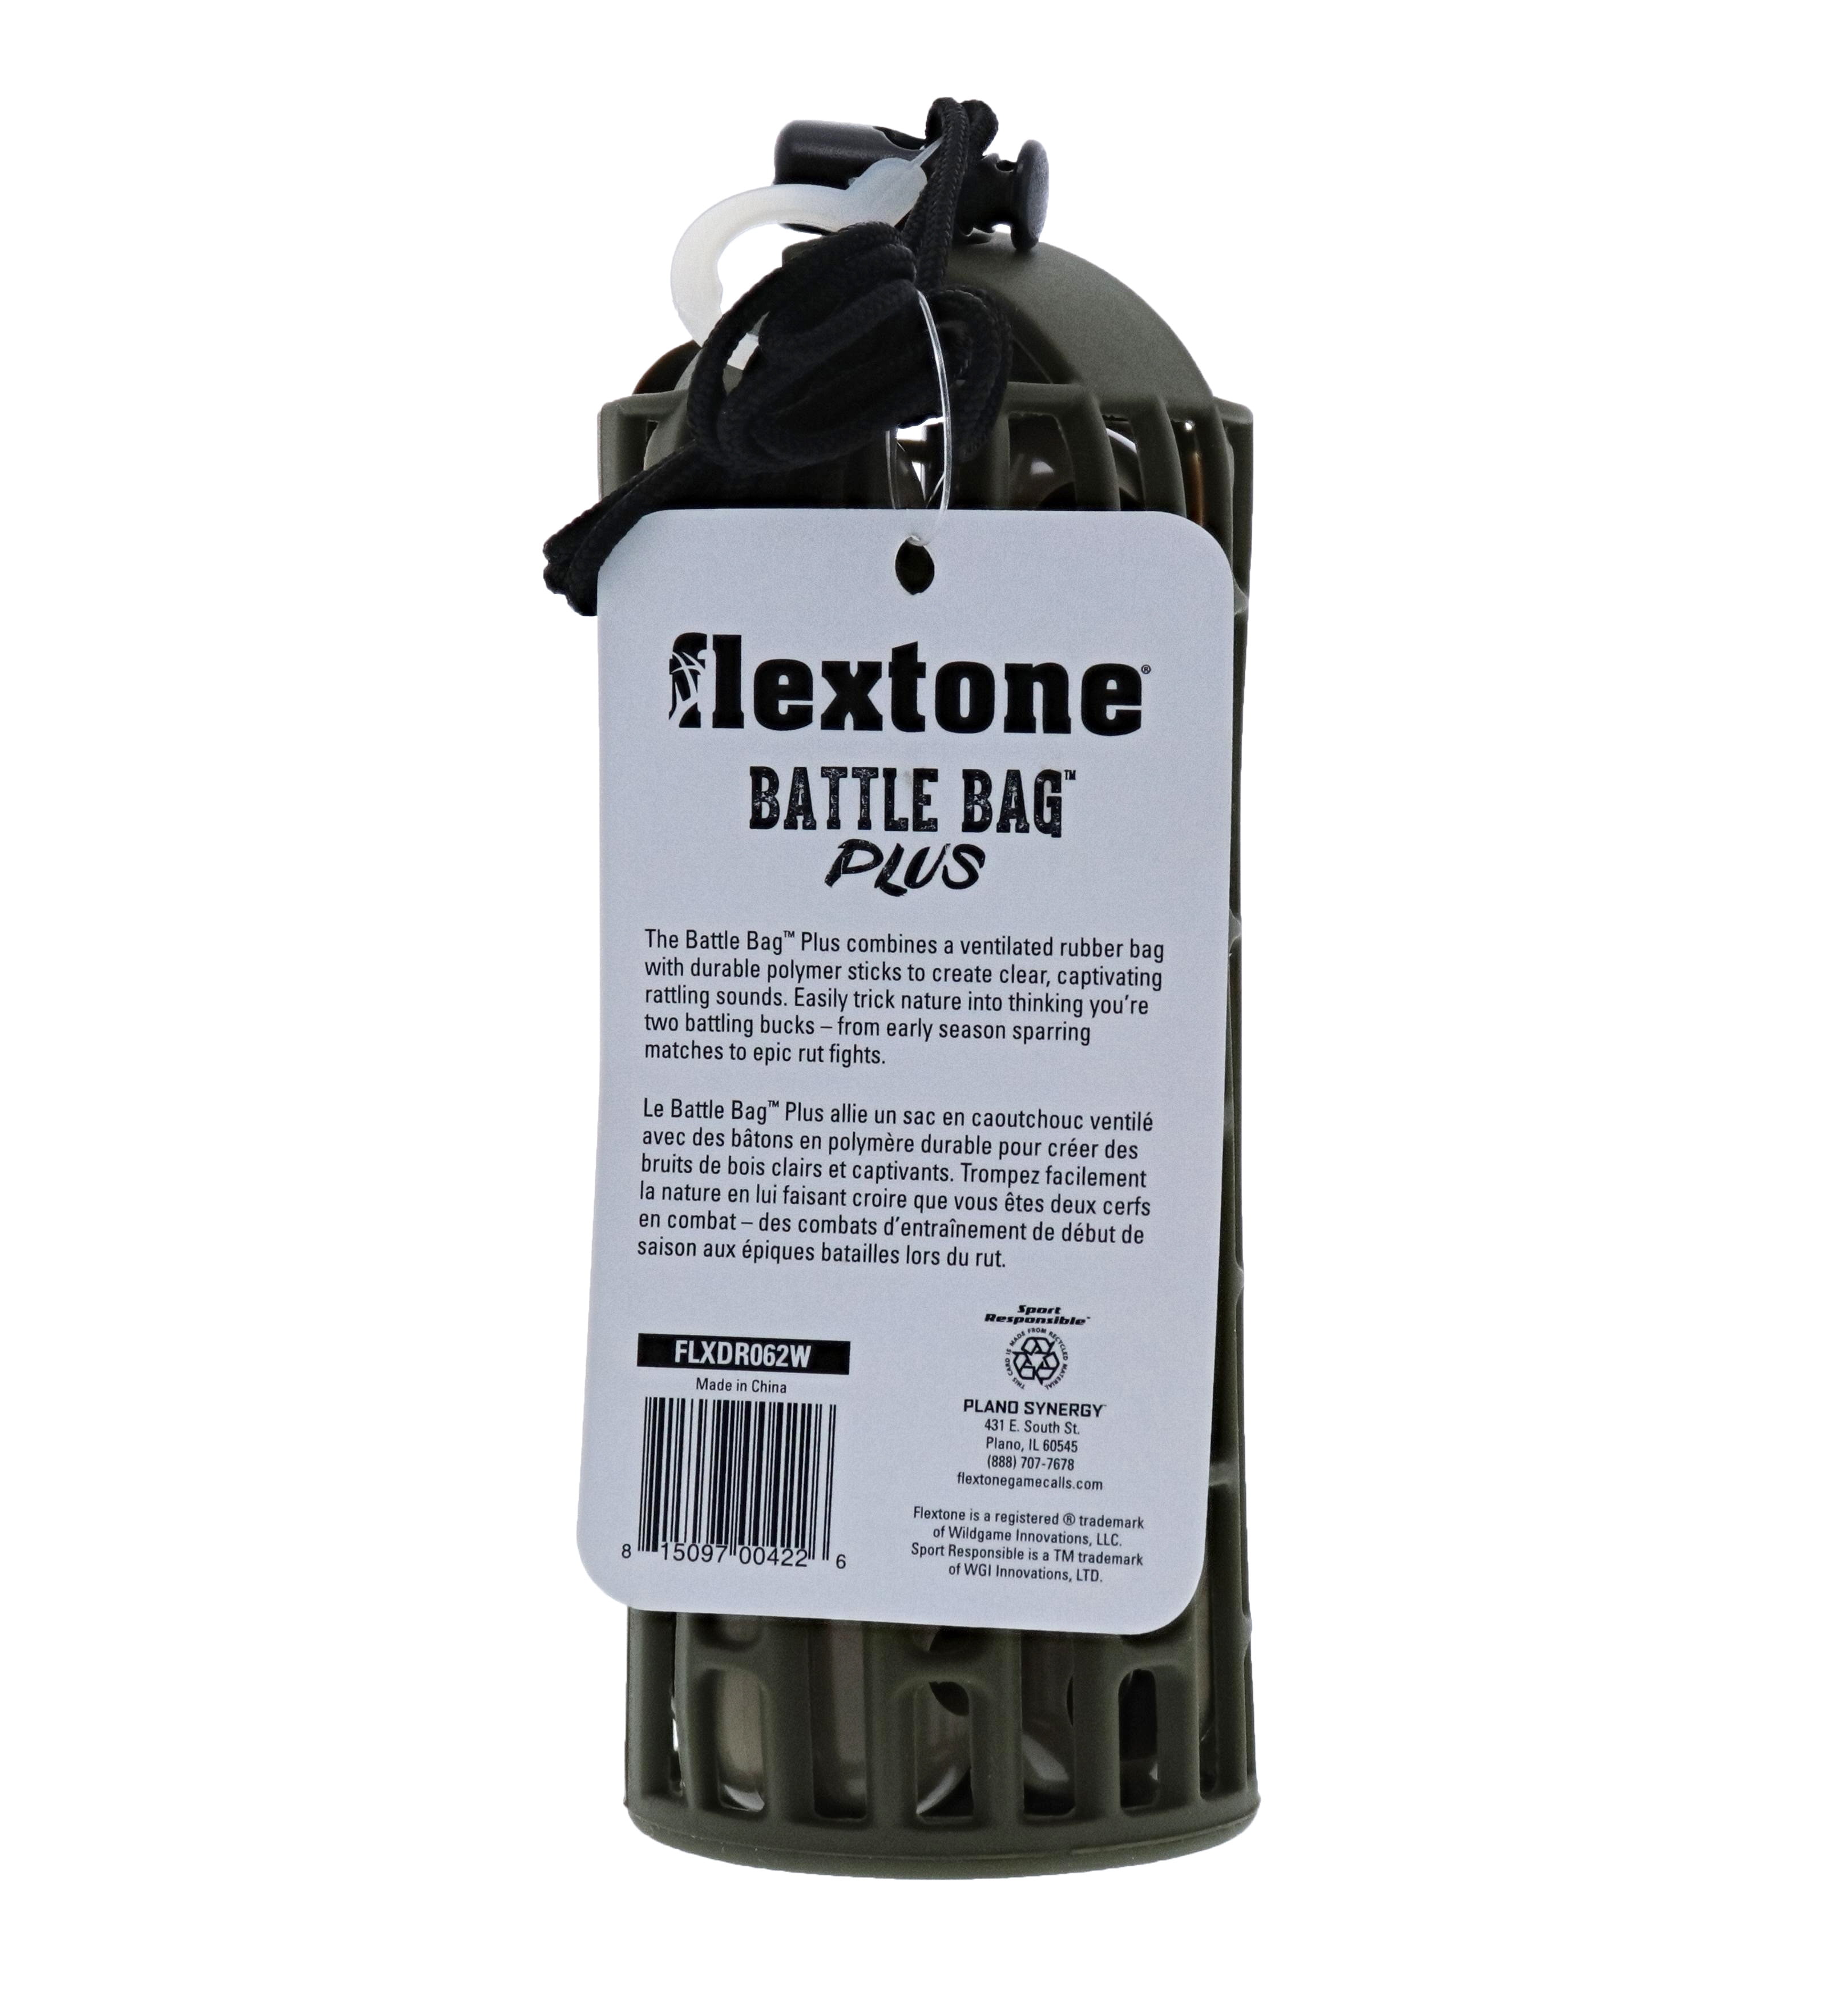 Flextone Battle Bag Plus Deer Call Flxdr062 for sale online 